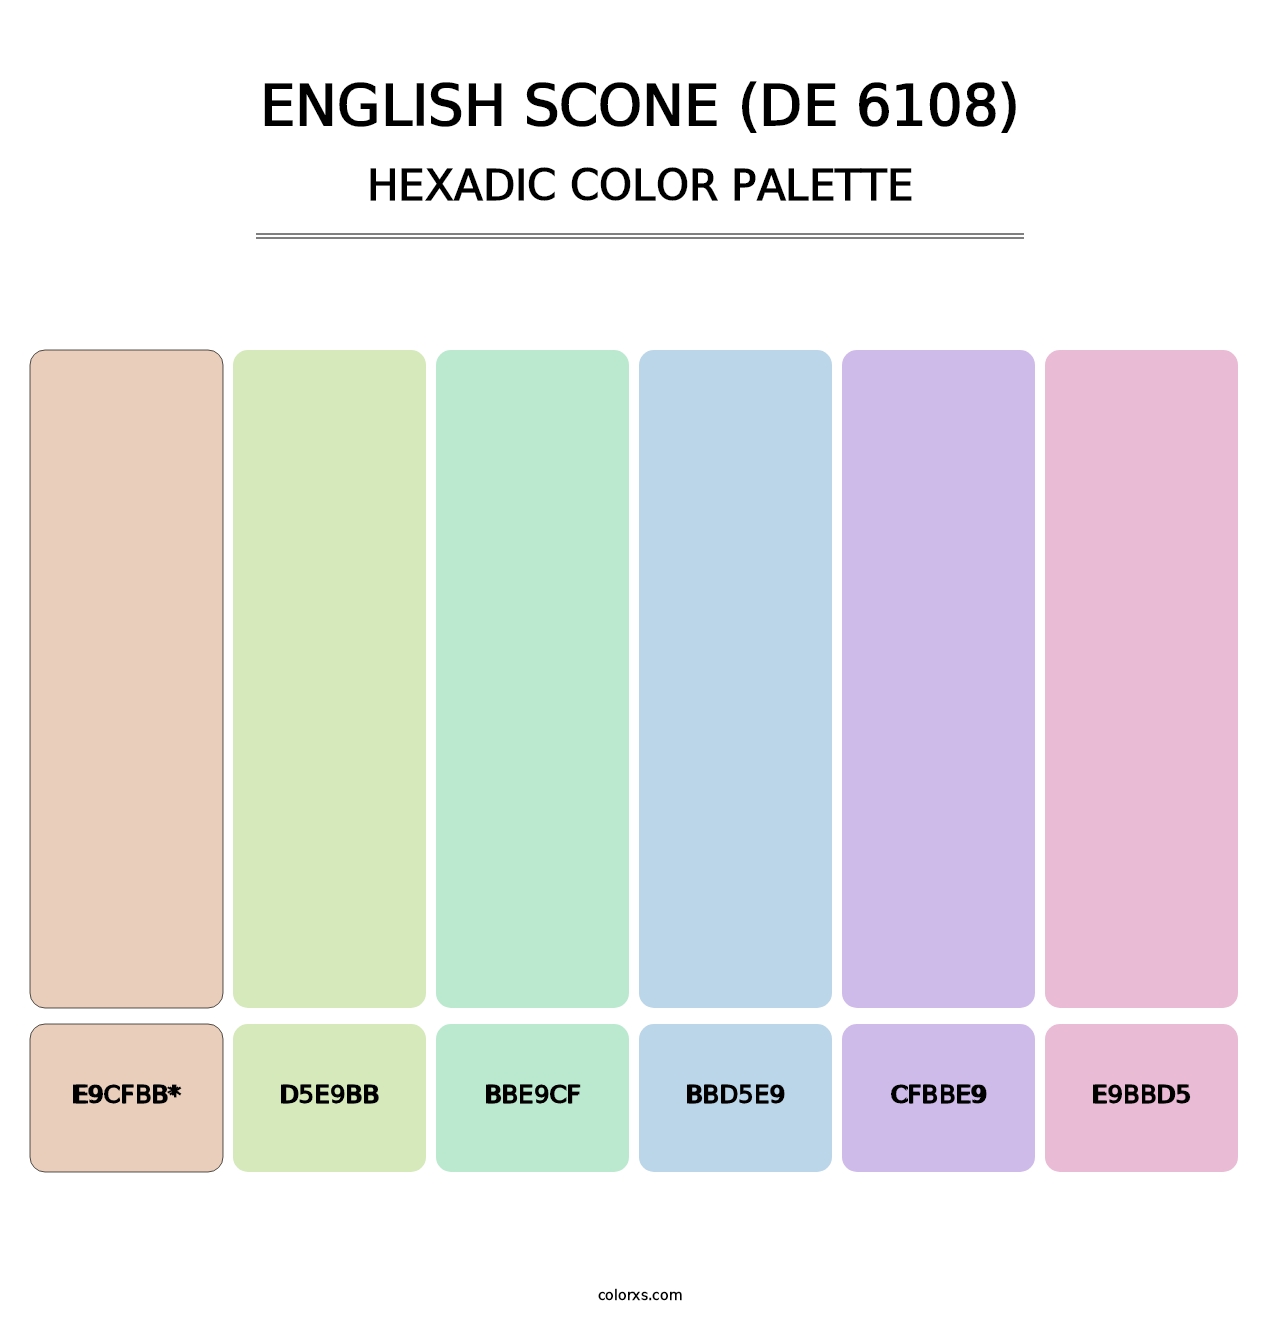 English Scone (DE 6108) - Hexadic Color Palette